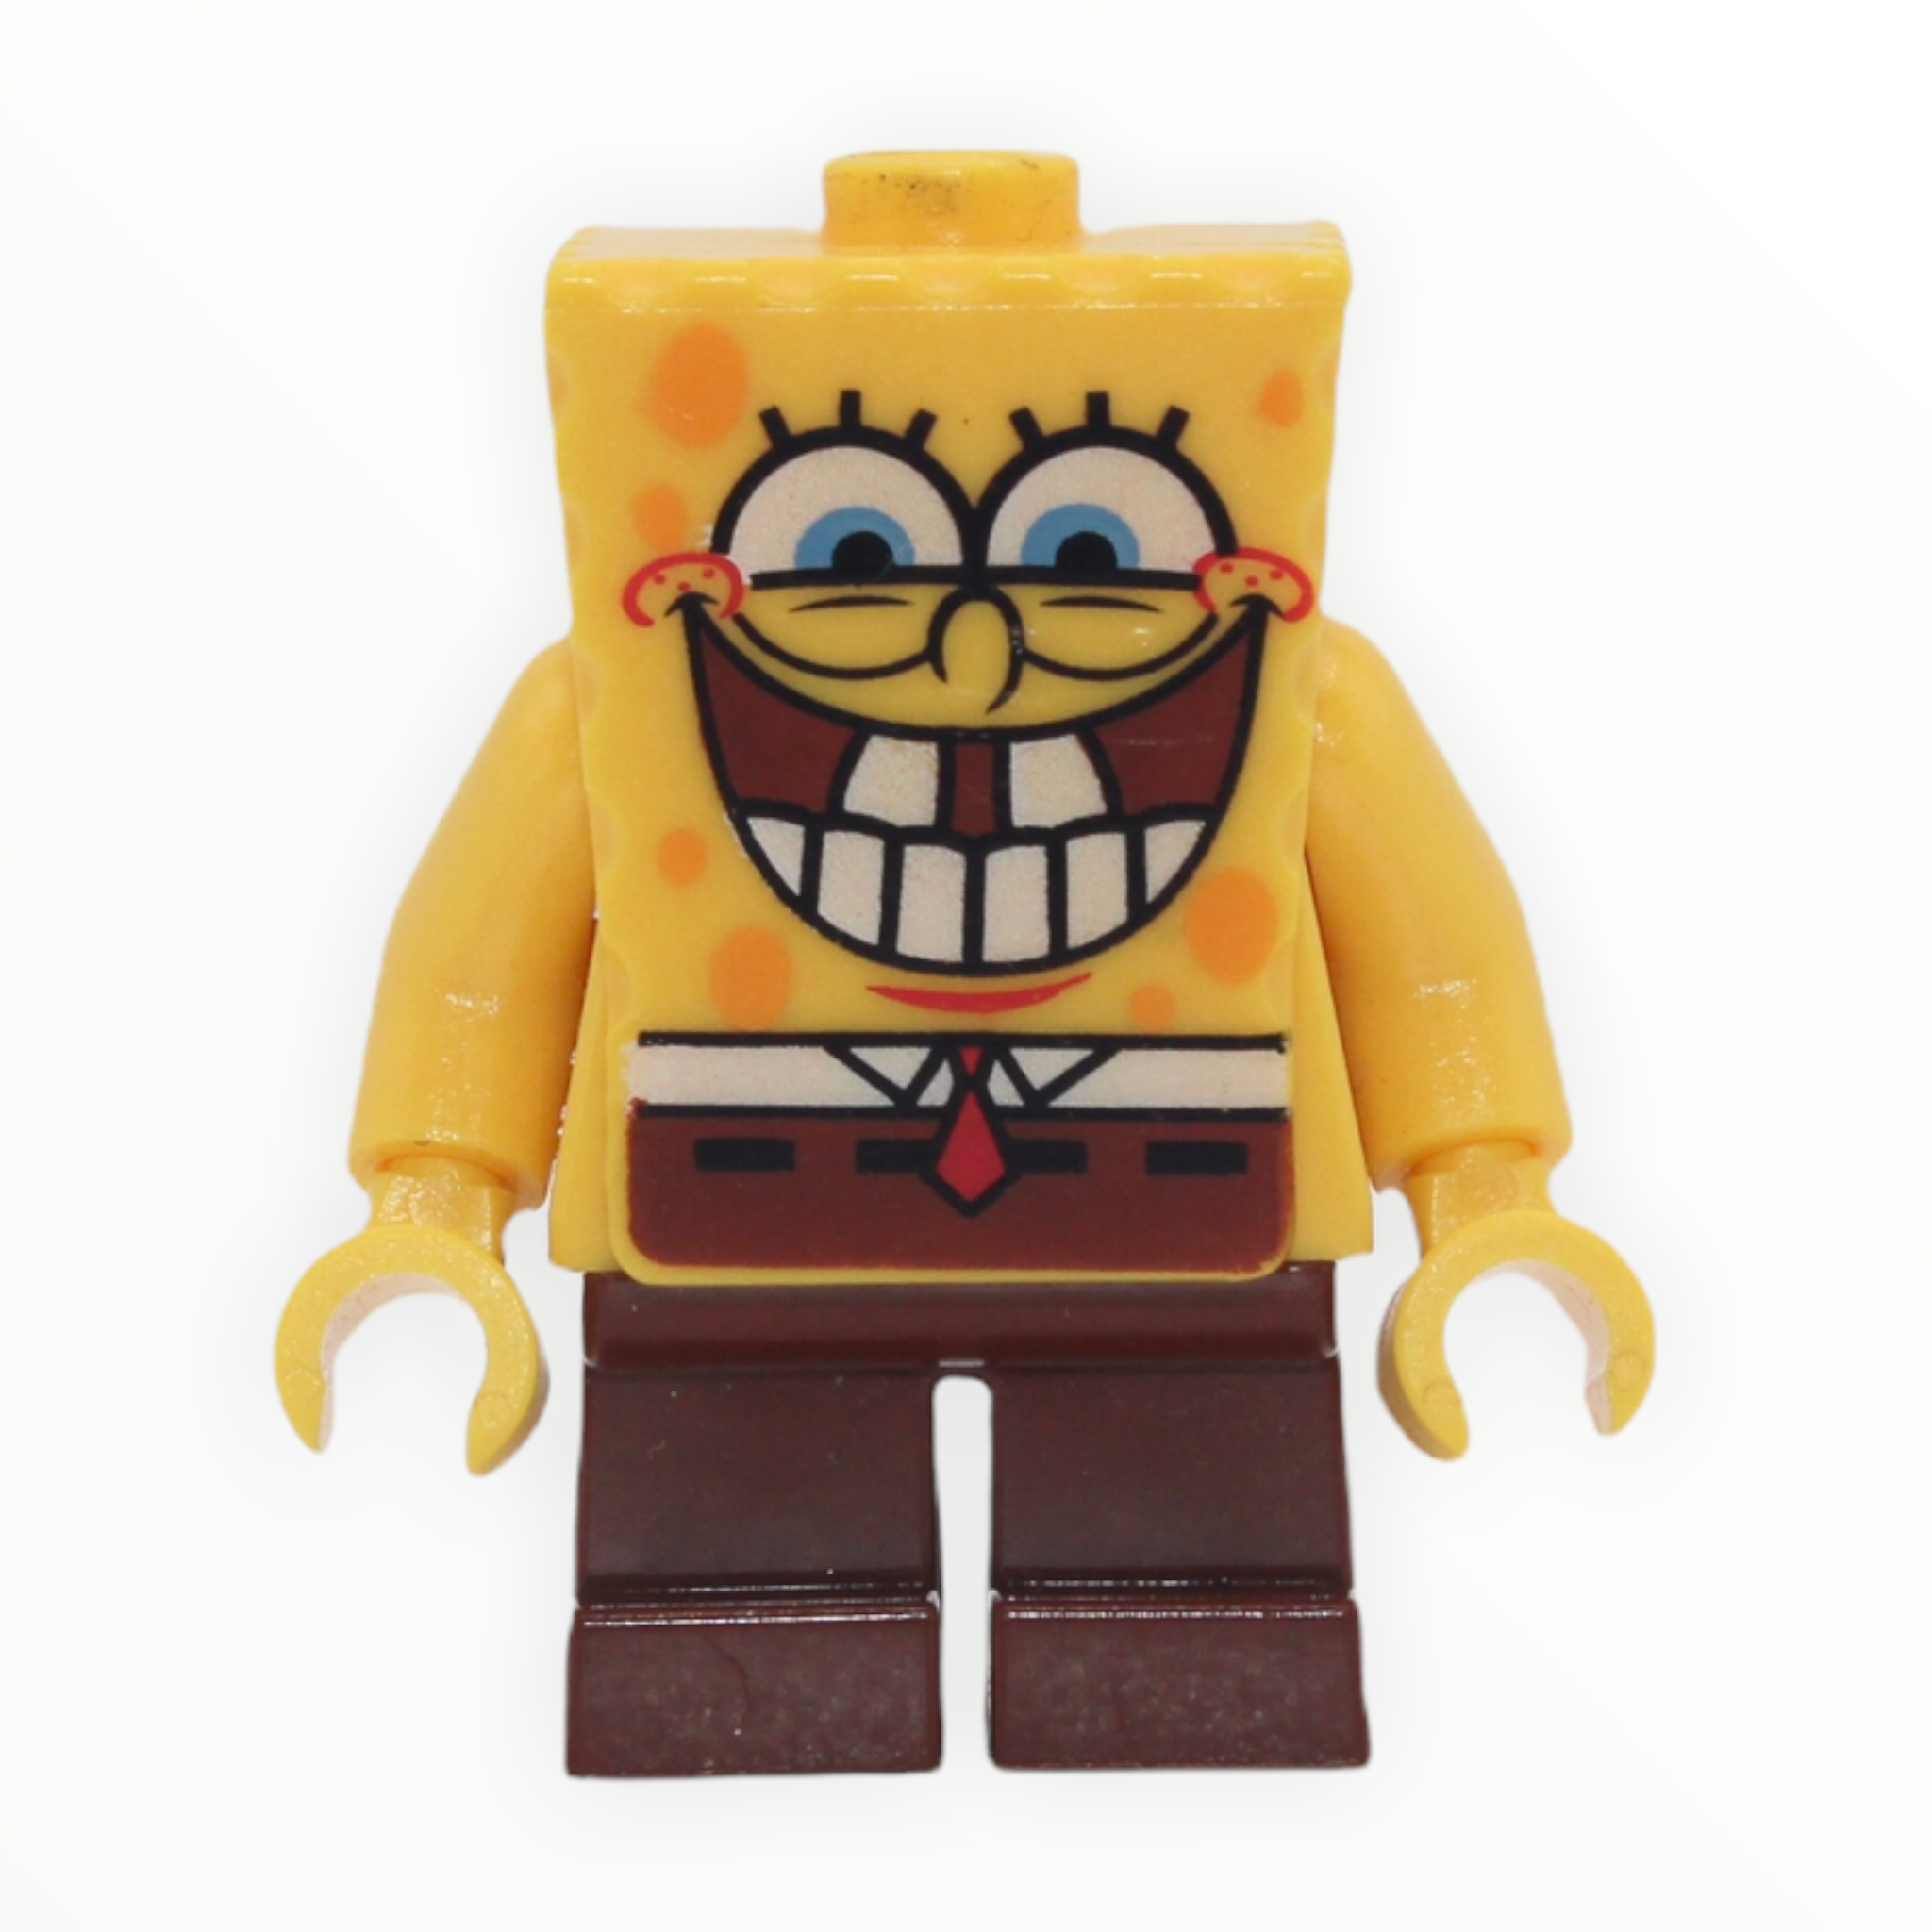 Spongebob Squarepants (grin with bottom teeth)